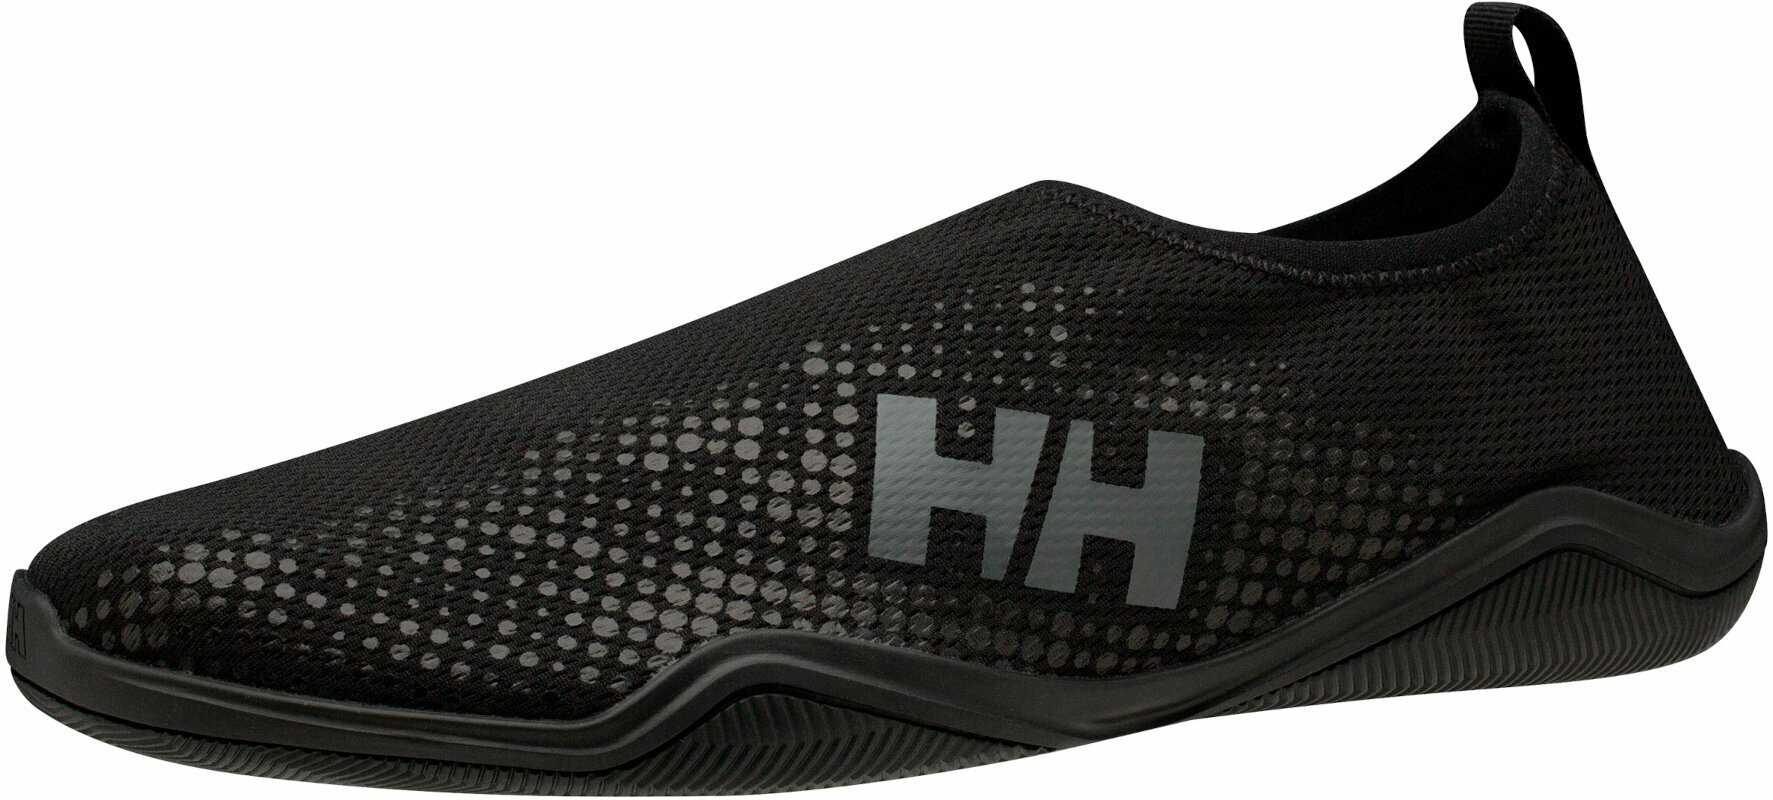 Scarpe uomo Helly Hansen Men's Crest Watermoc Black/Charcoal 43